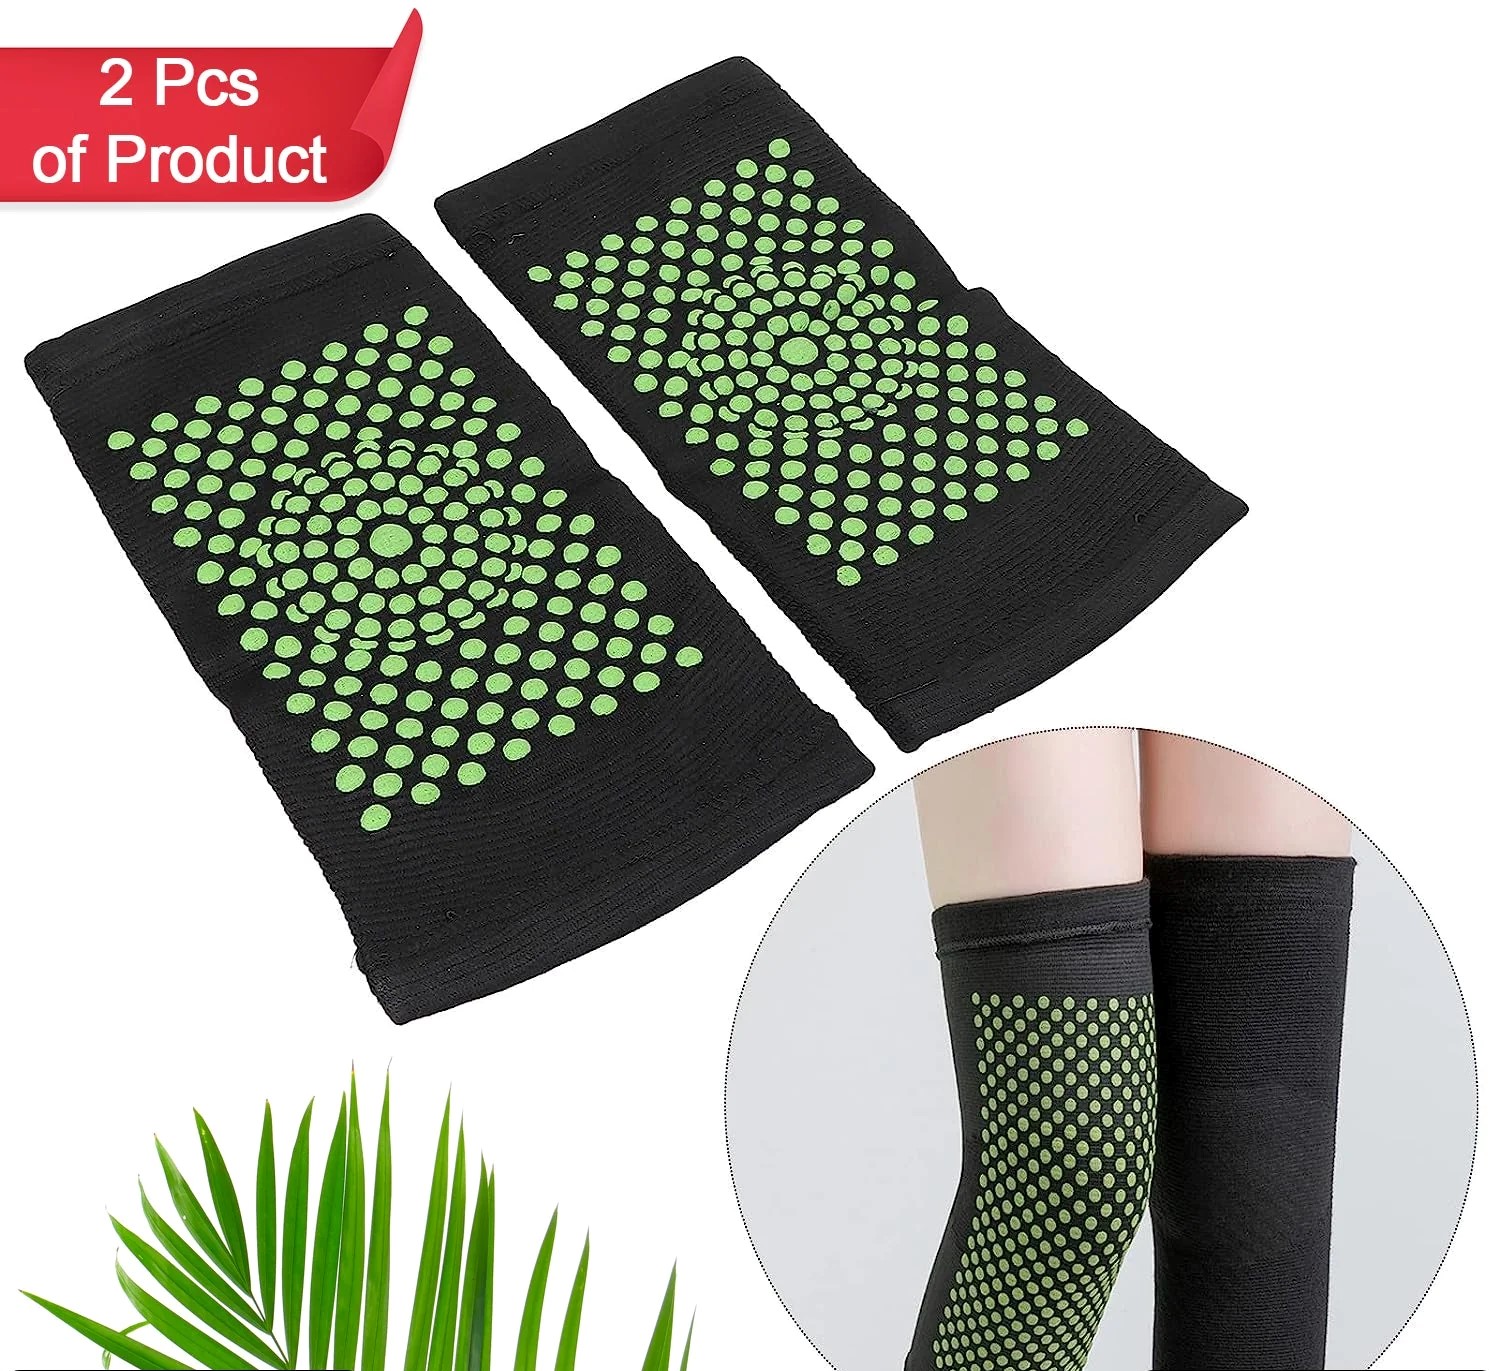 cnp knee protector pad 2pcs